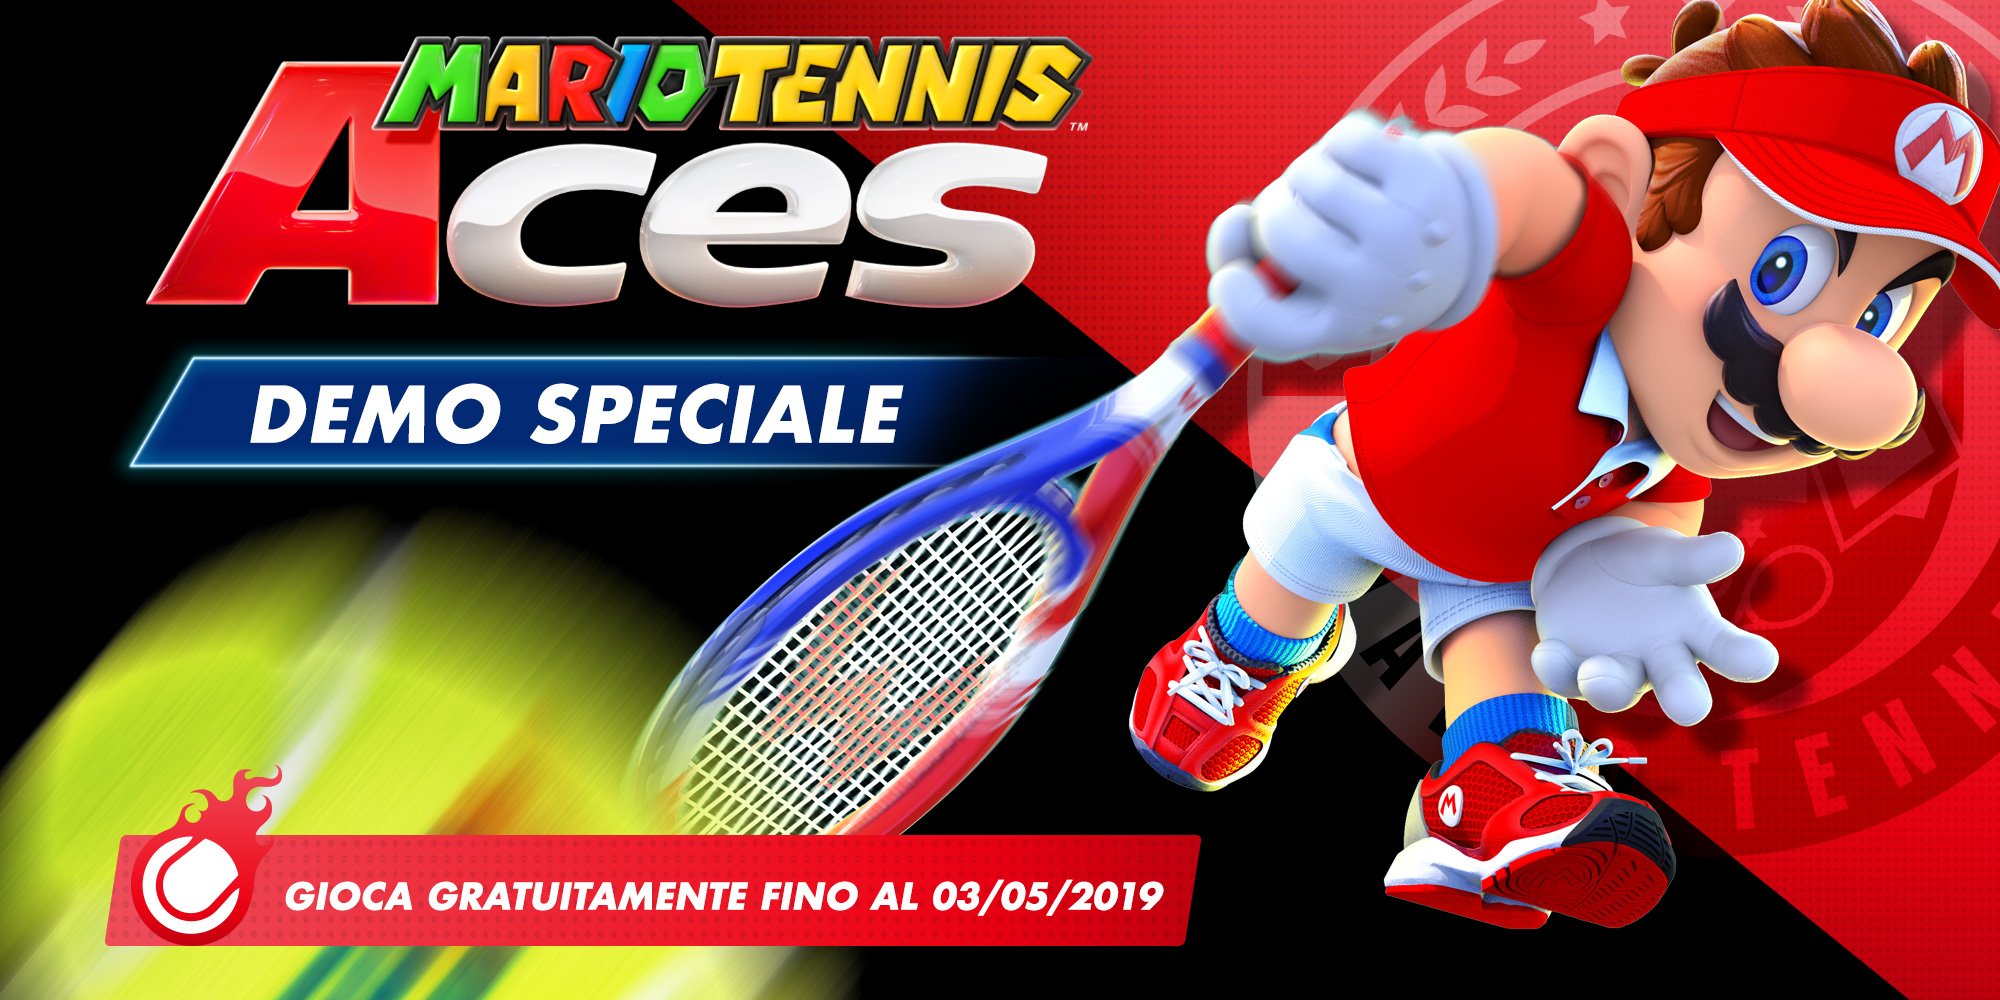 Già disponibile la demo speciale per Mario Tennis Aces